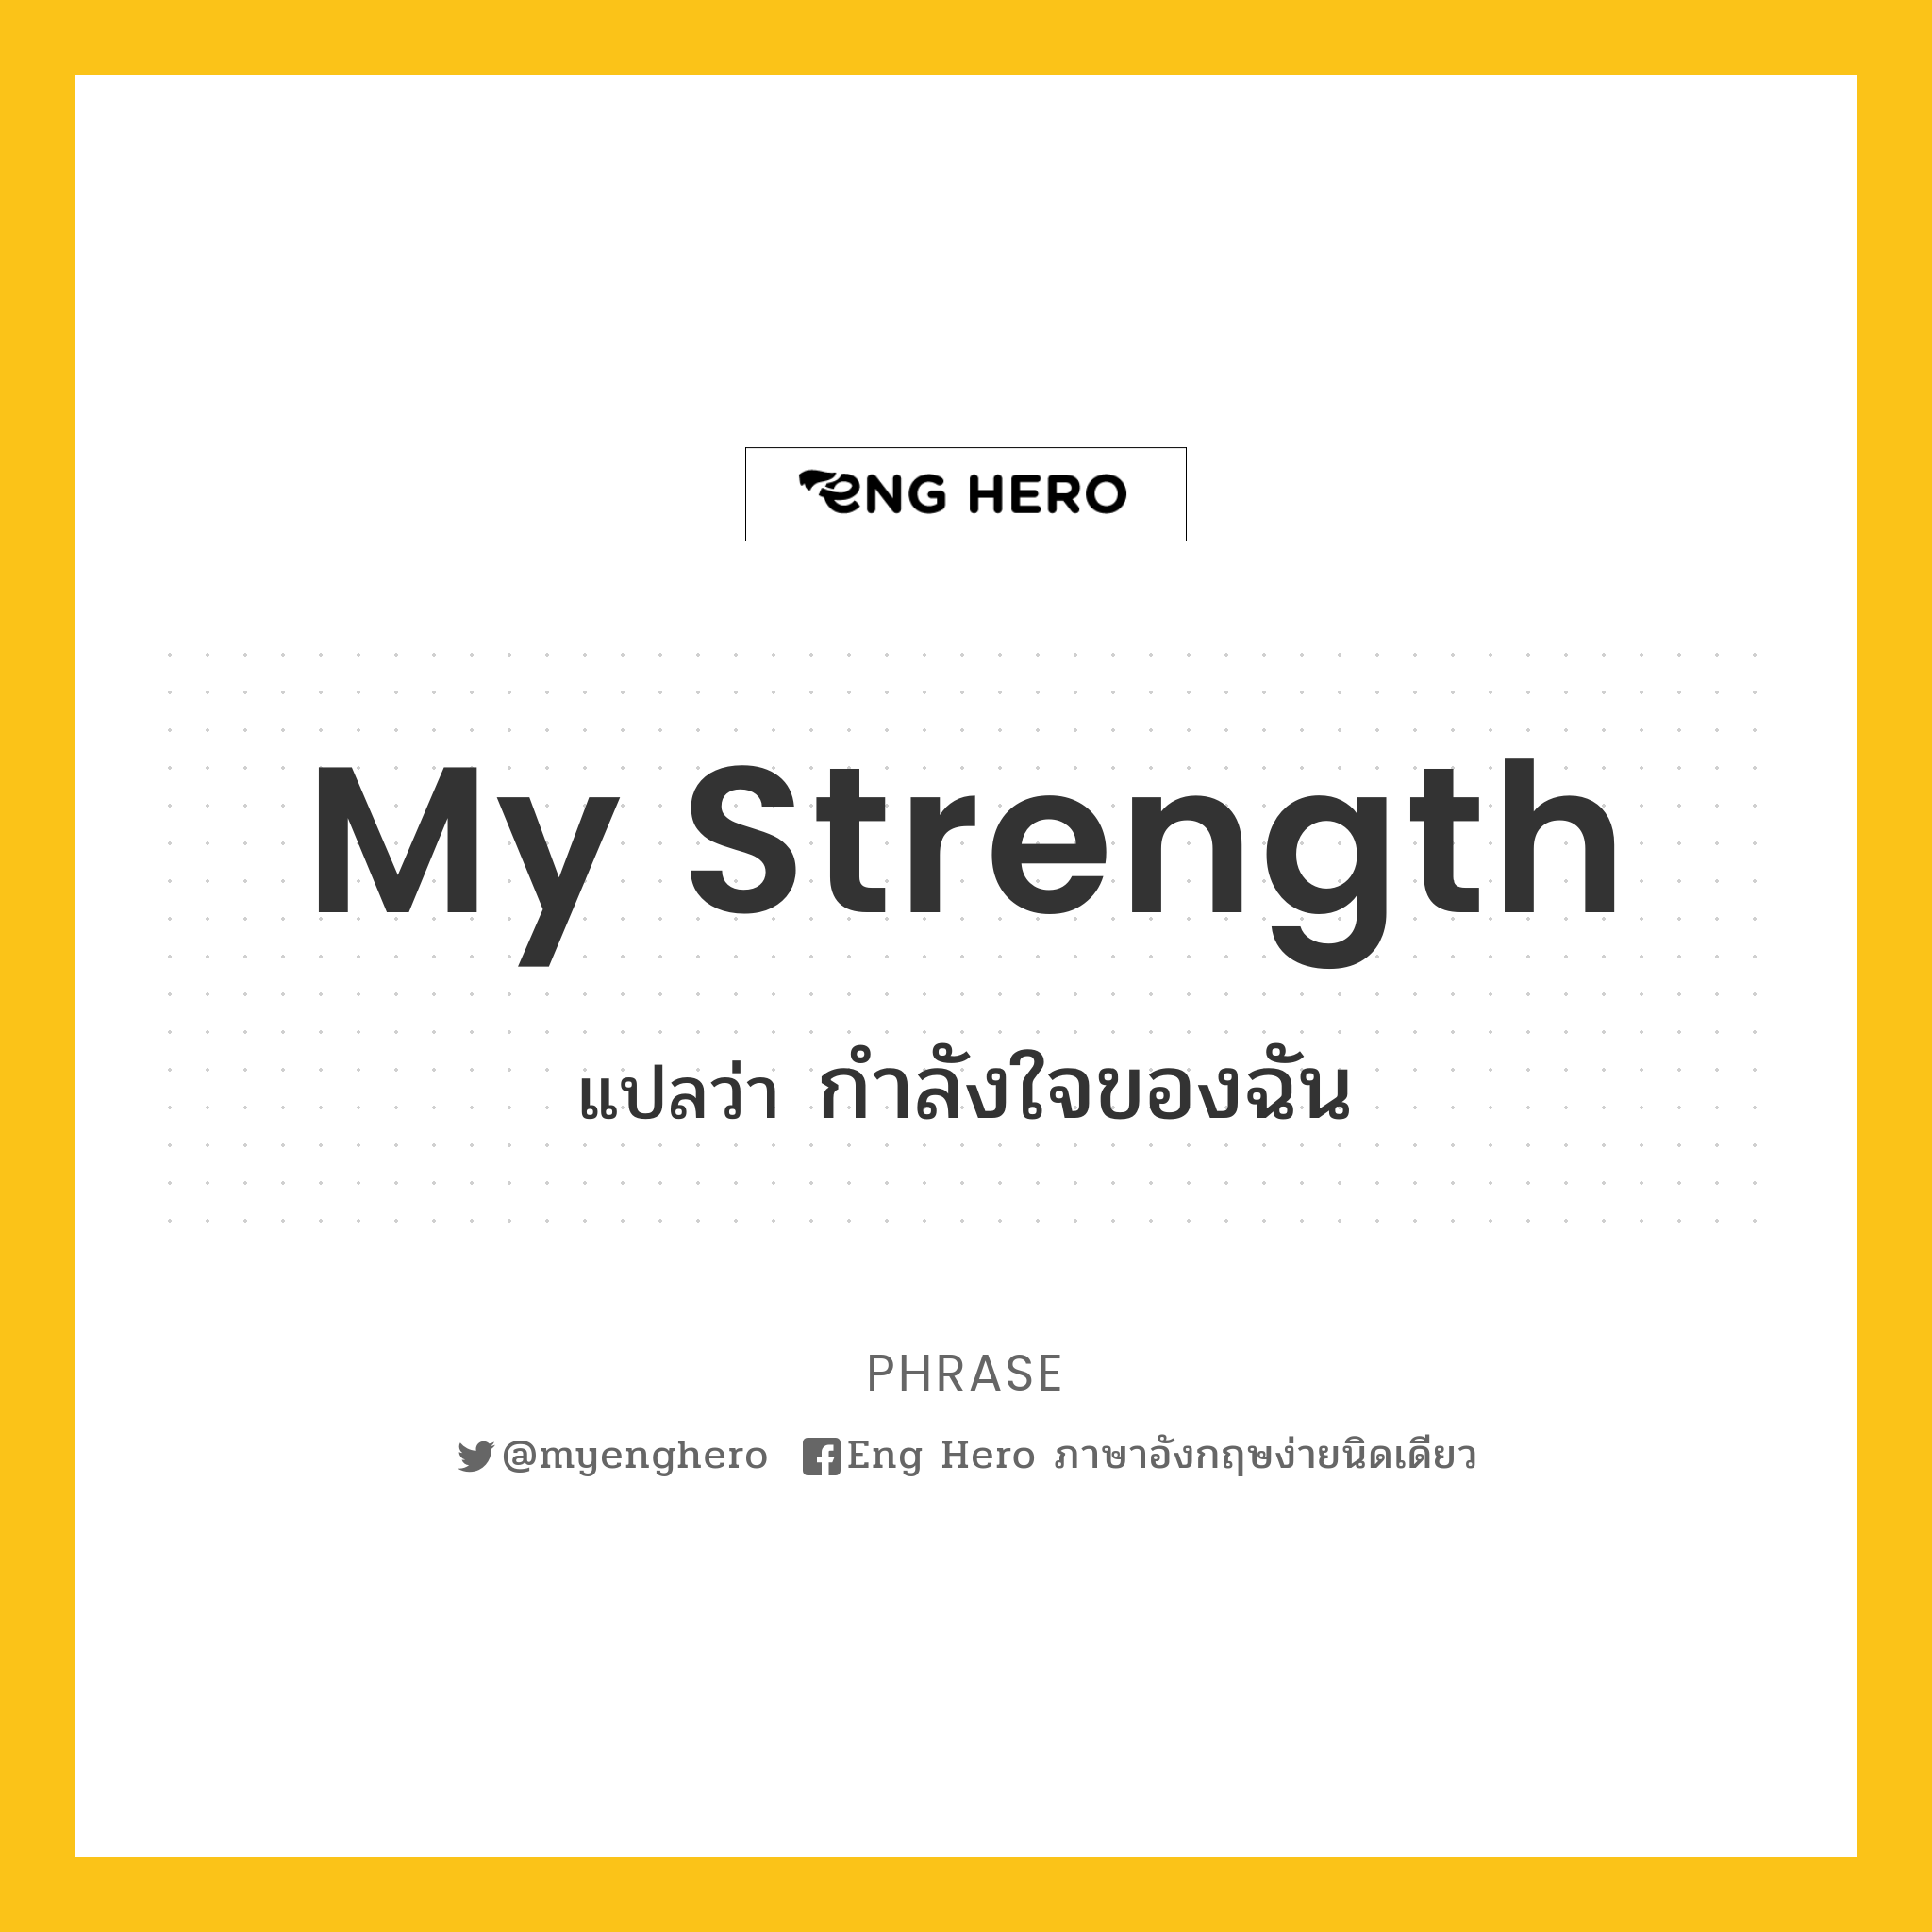 My strength